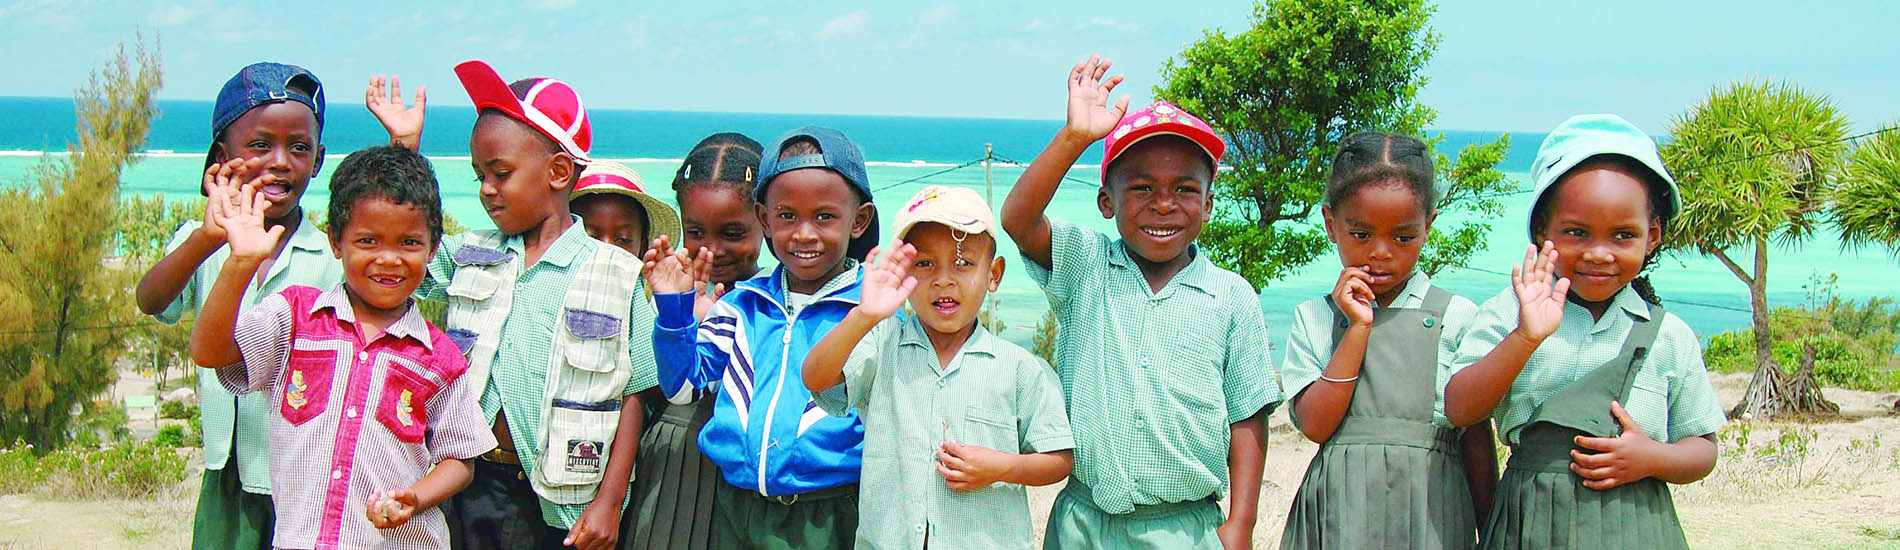 Kids on way to school rodrigues island